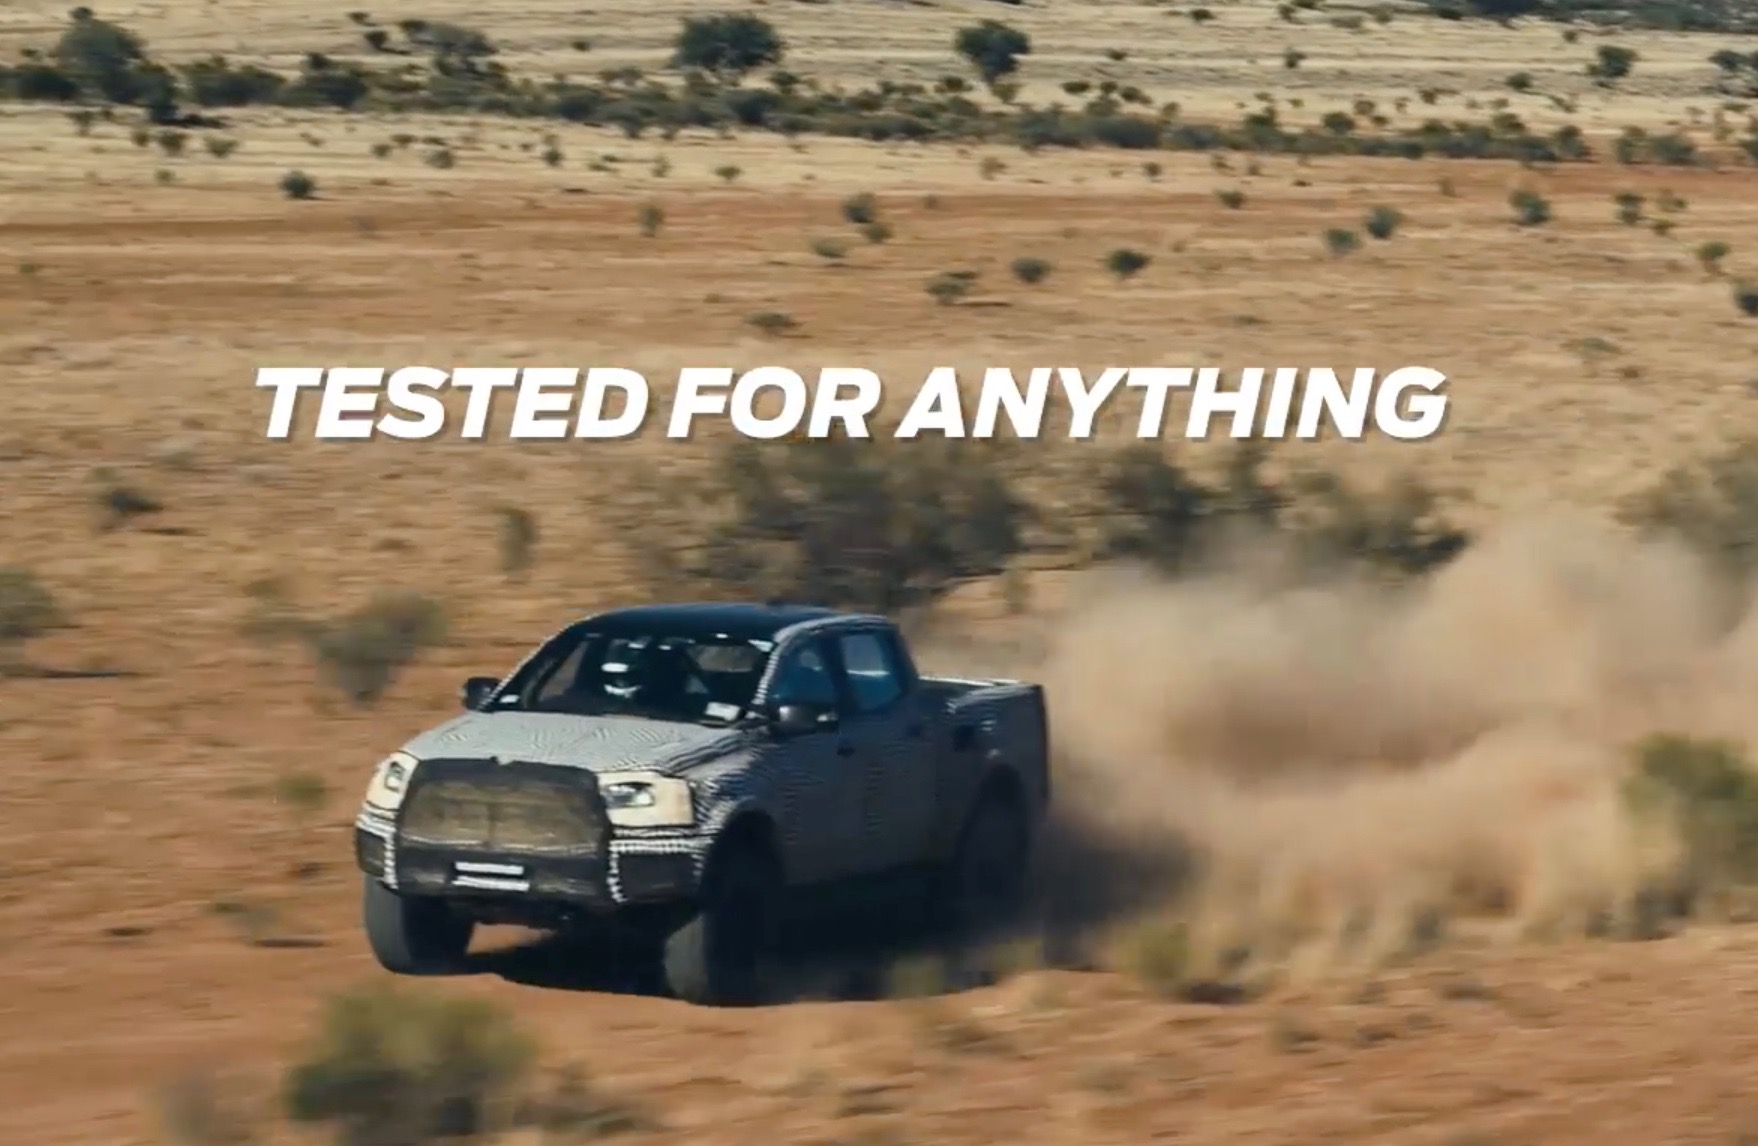 2018 Ford Ranger Raptor undergoes tough off-road testing (video)